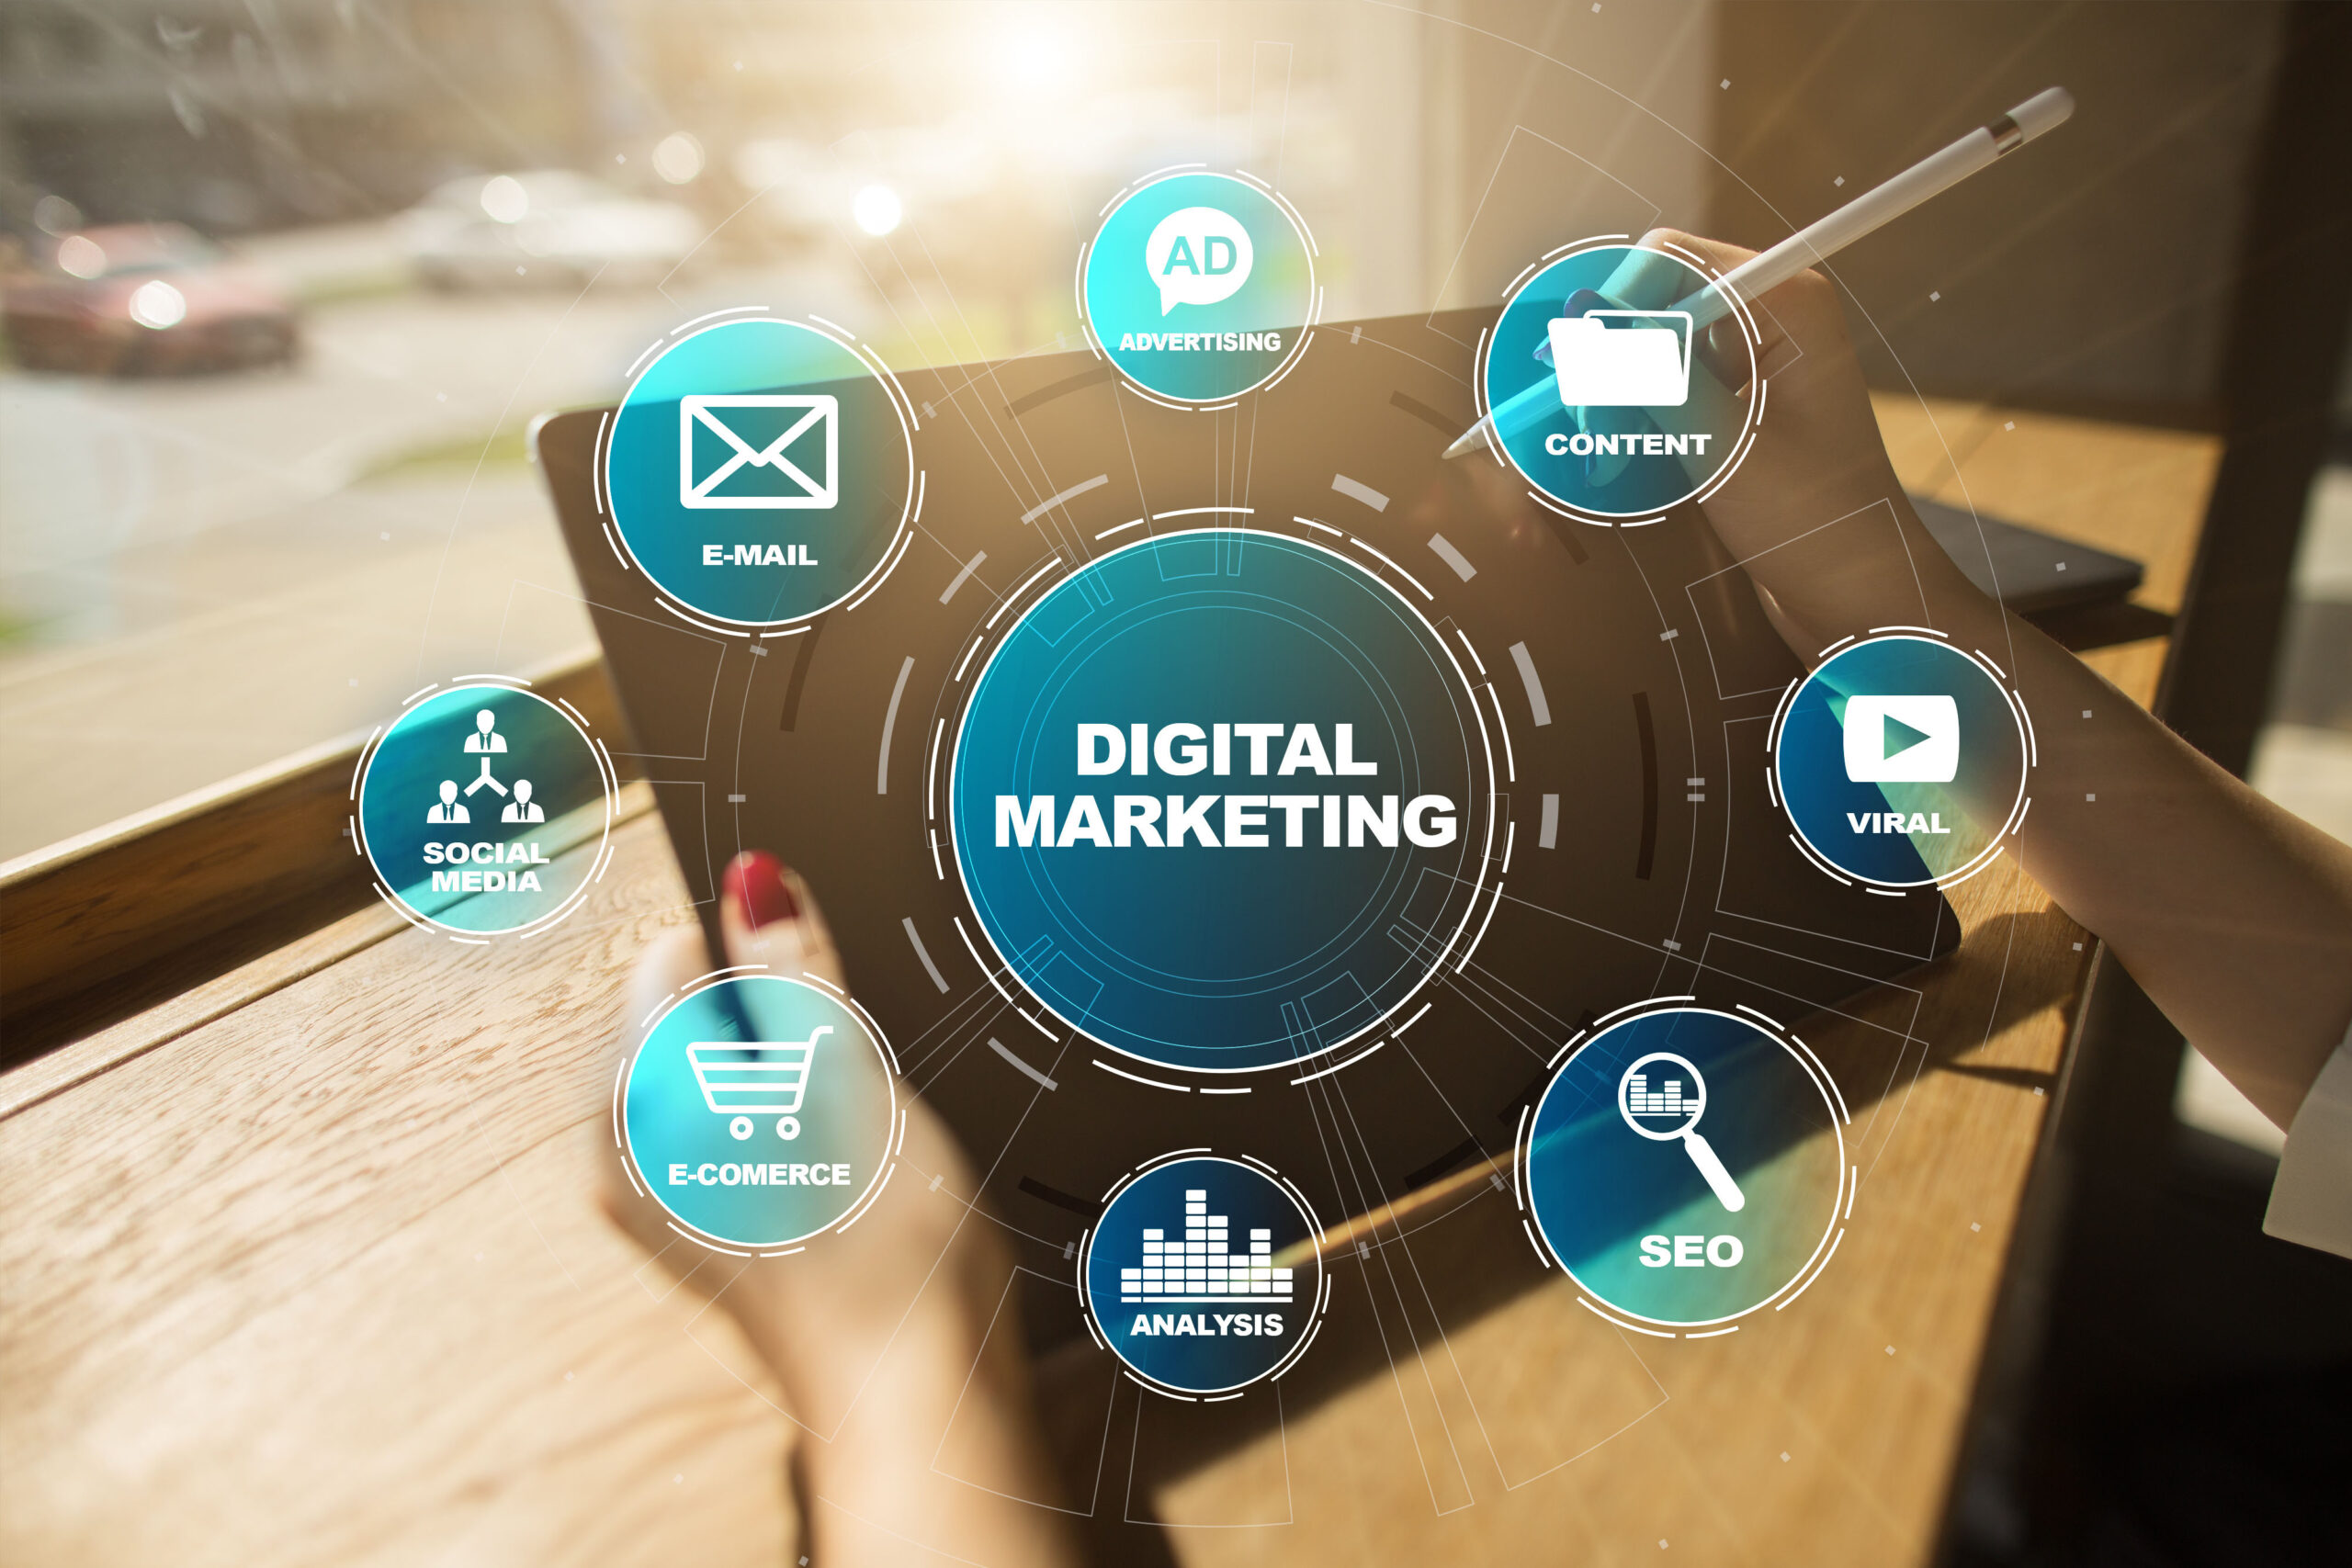 Types of the digital marketing